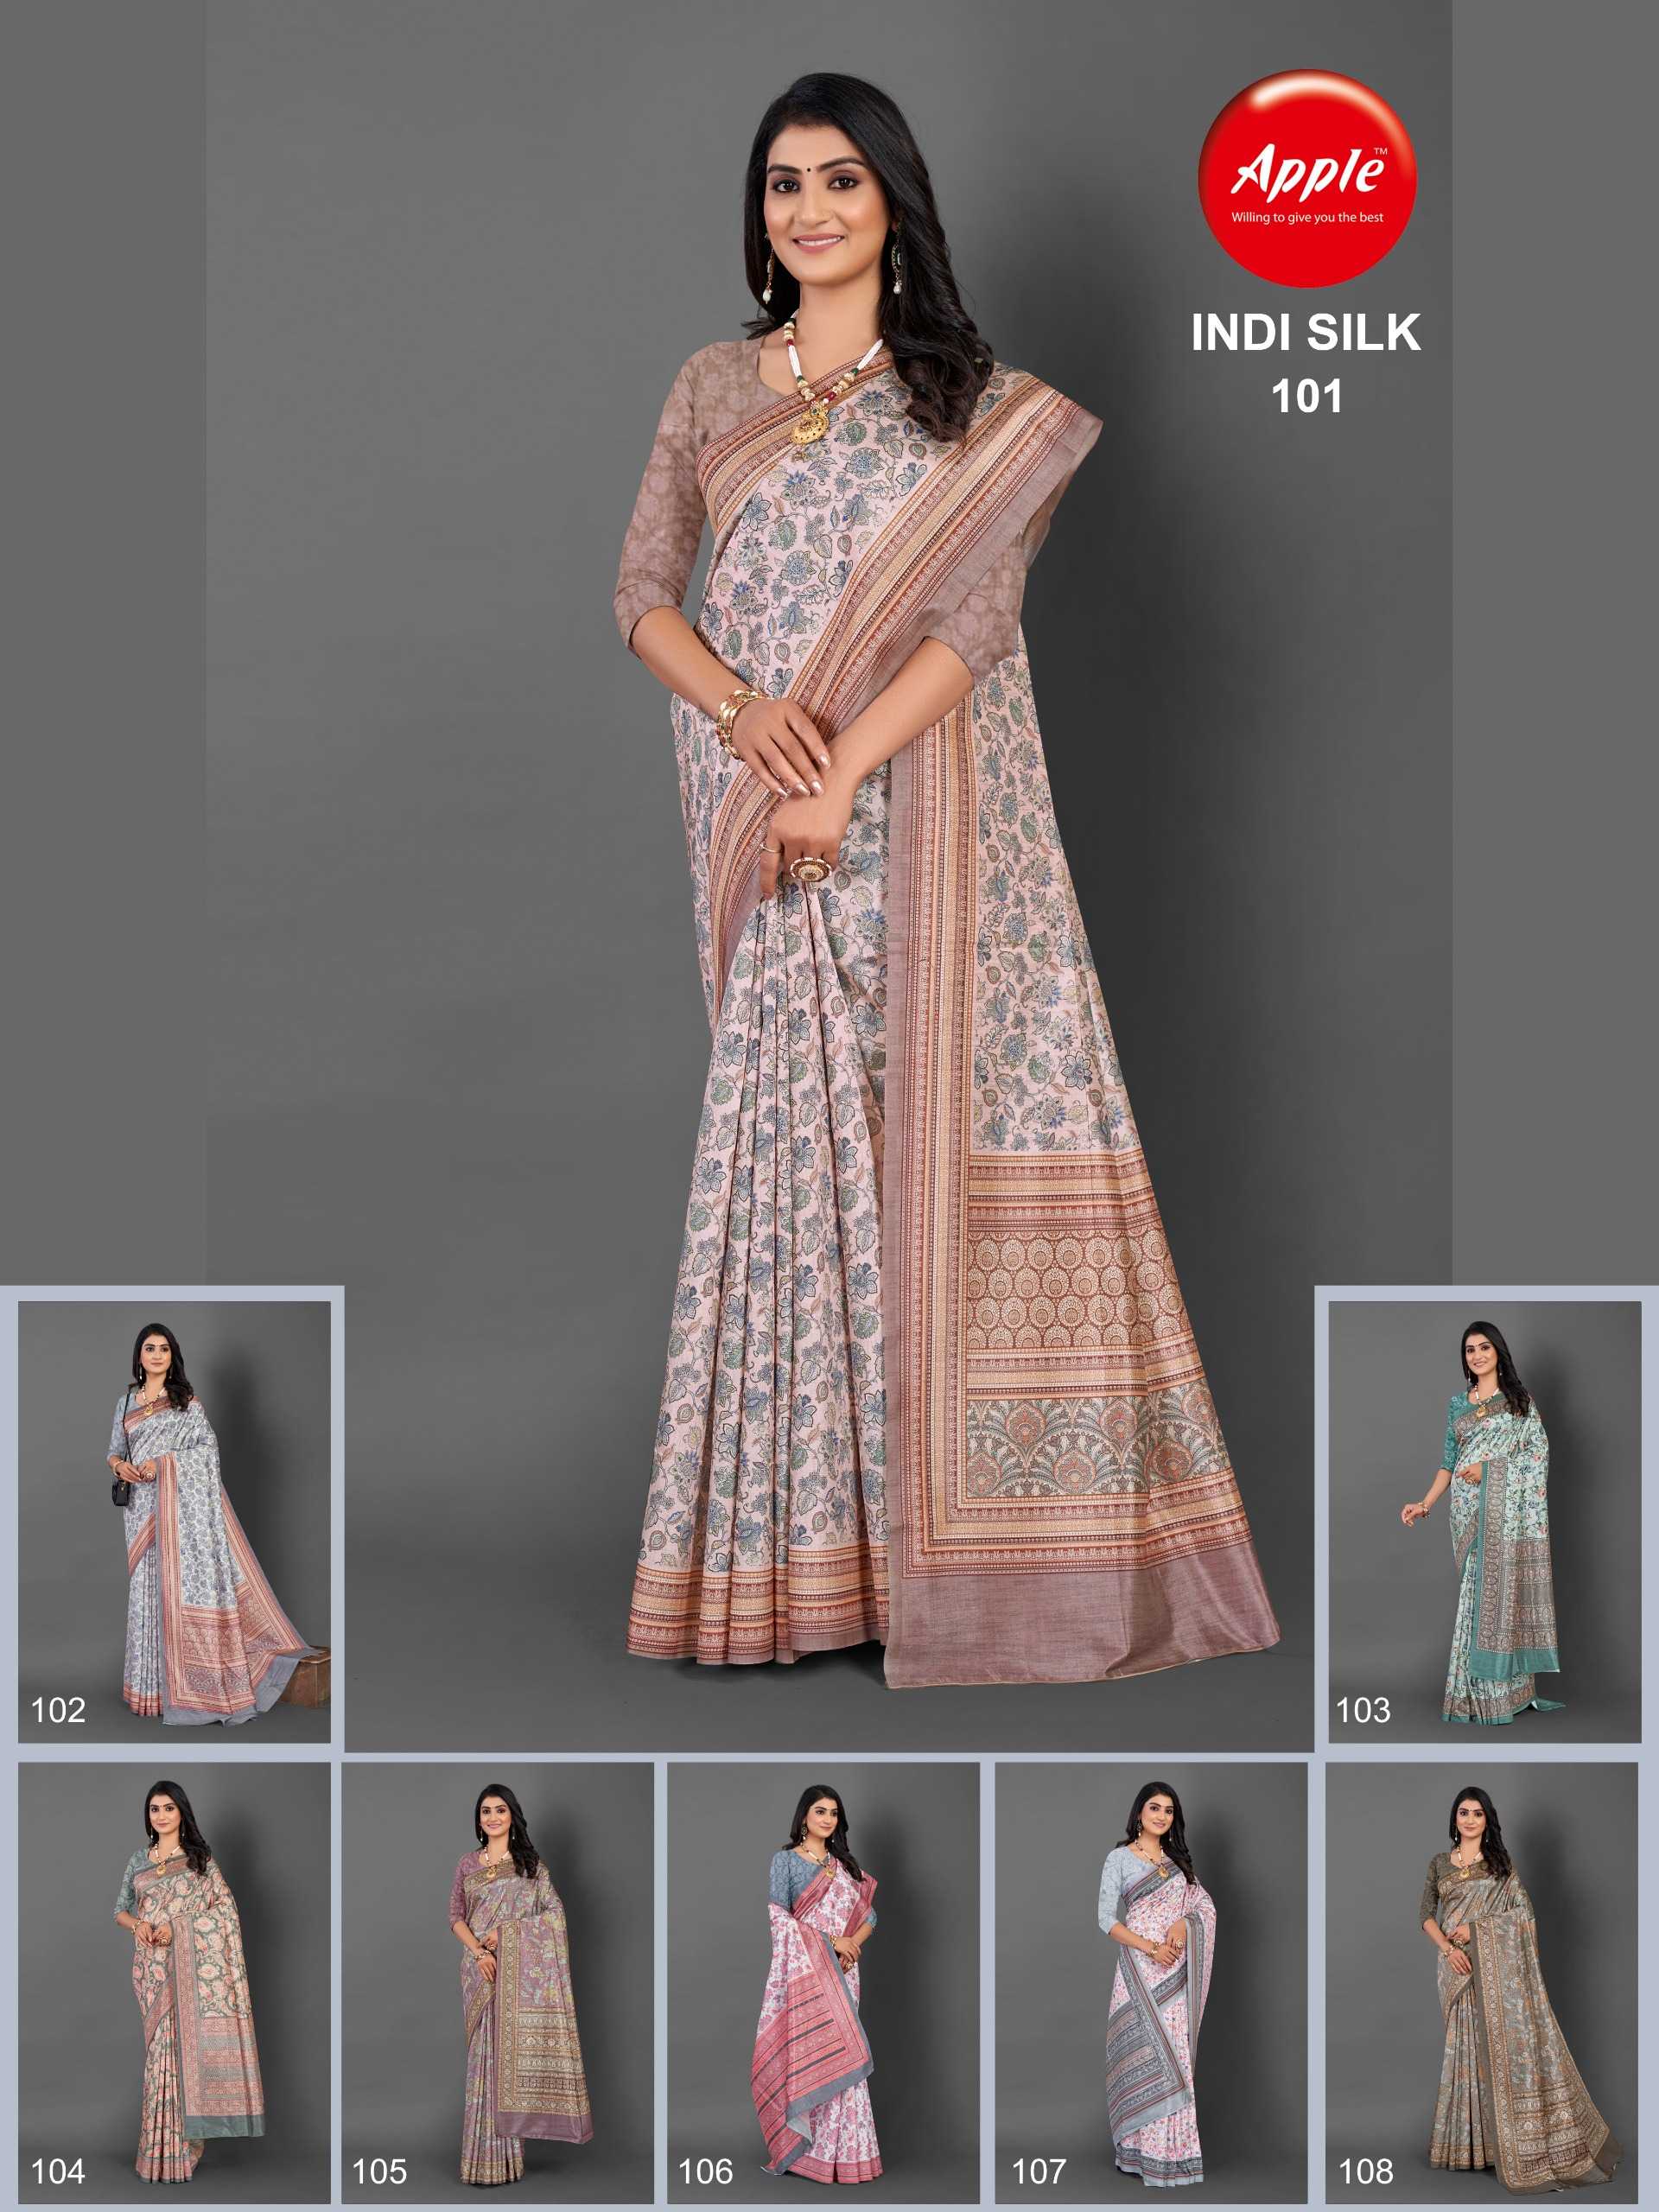 apple indi silk vol 101 launching new silk saree 